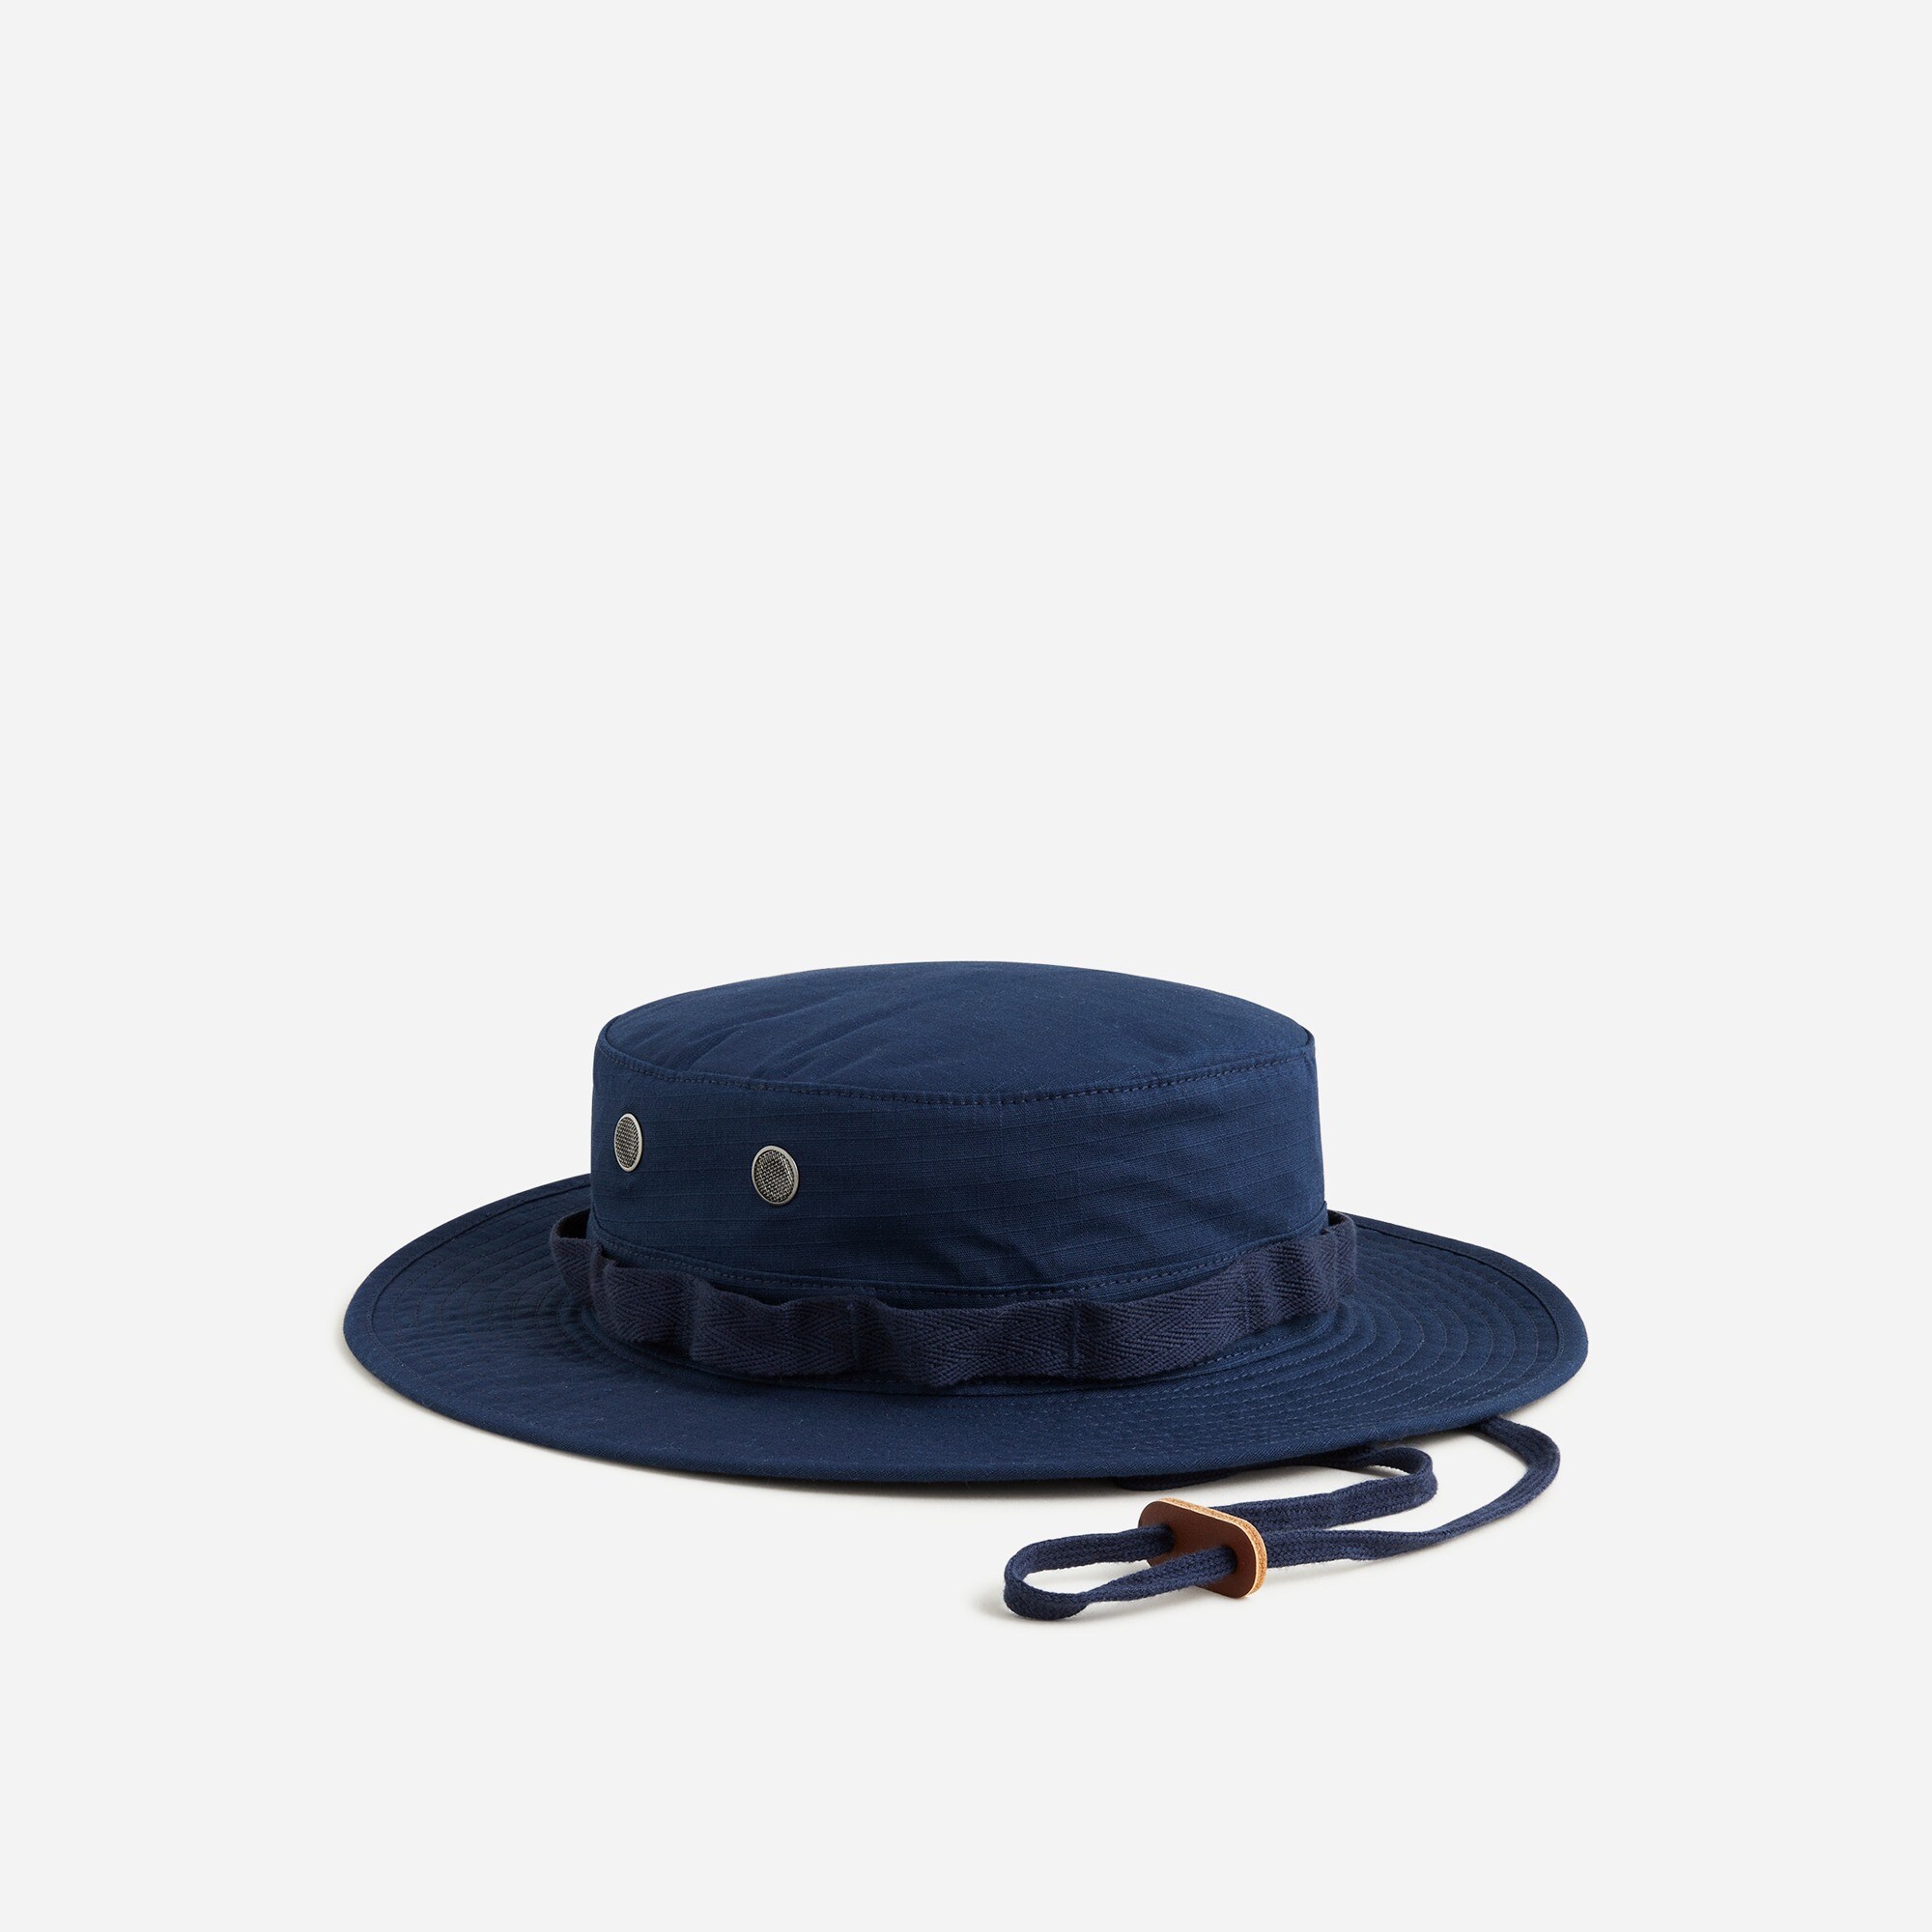  Boonie hat in ripstop cotton